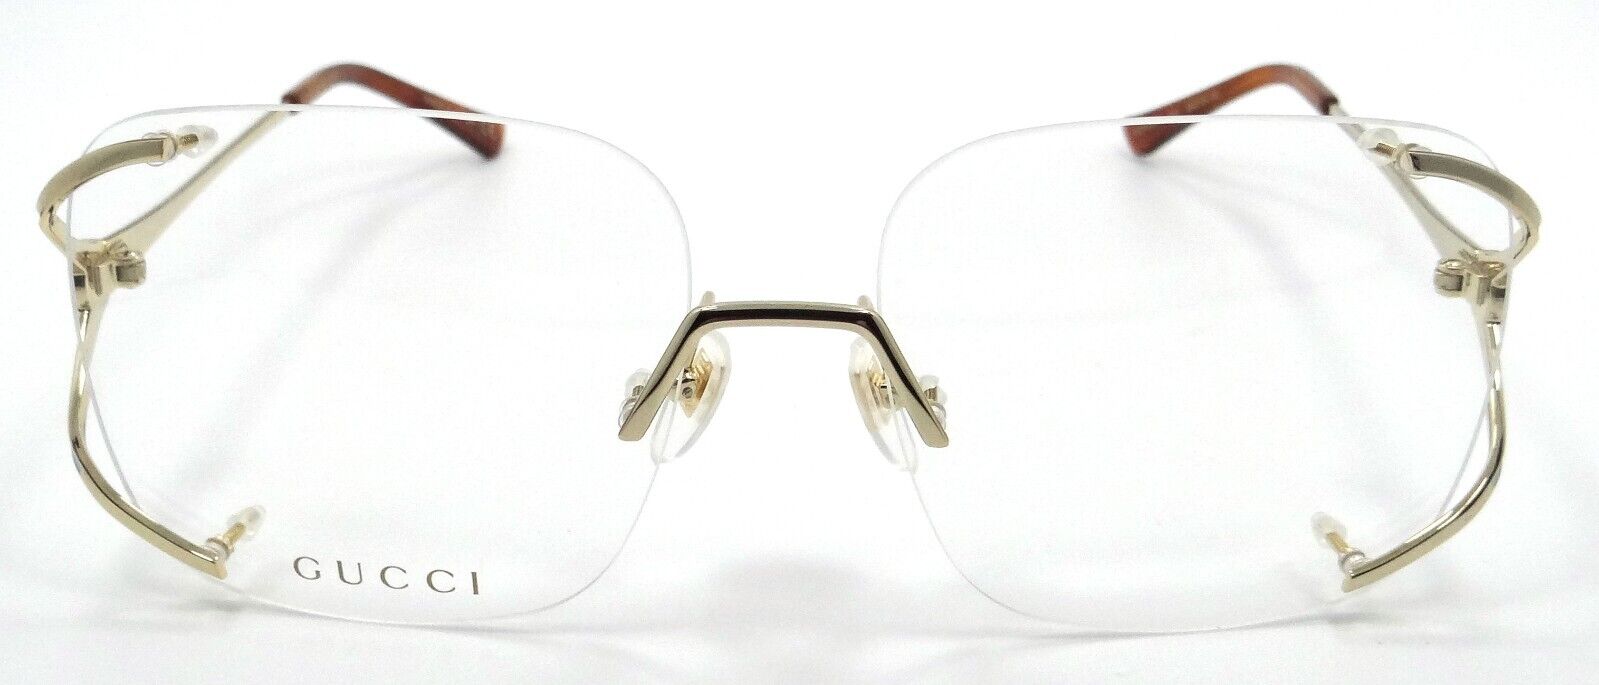 Gucci Eyeglasses Frames GG0652O 002 58-16-130 Gold / Light Blue Made in Japan-889652276953-classypw.com-2